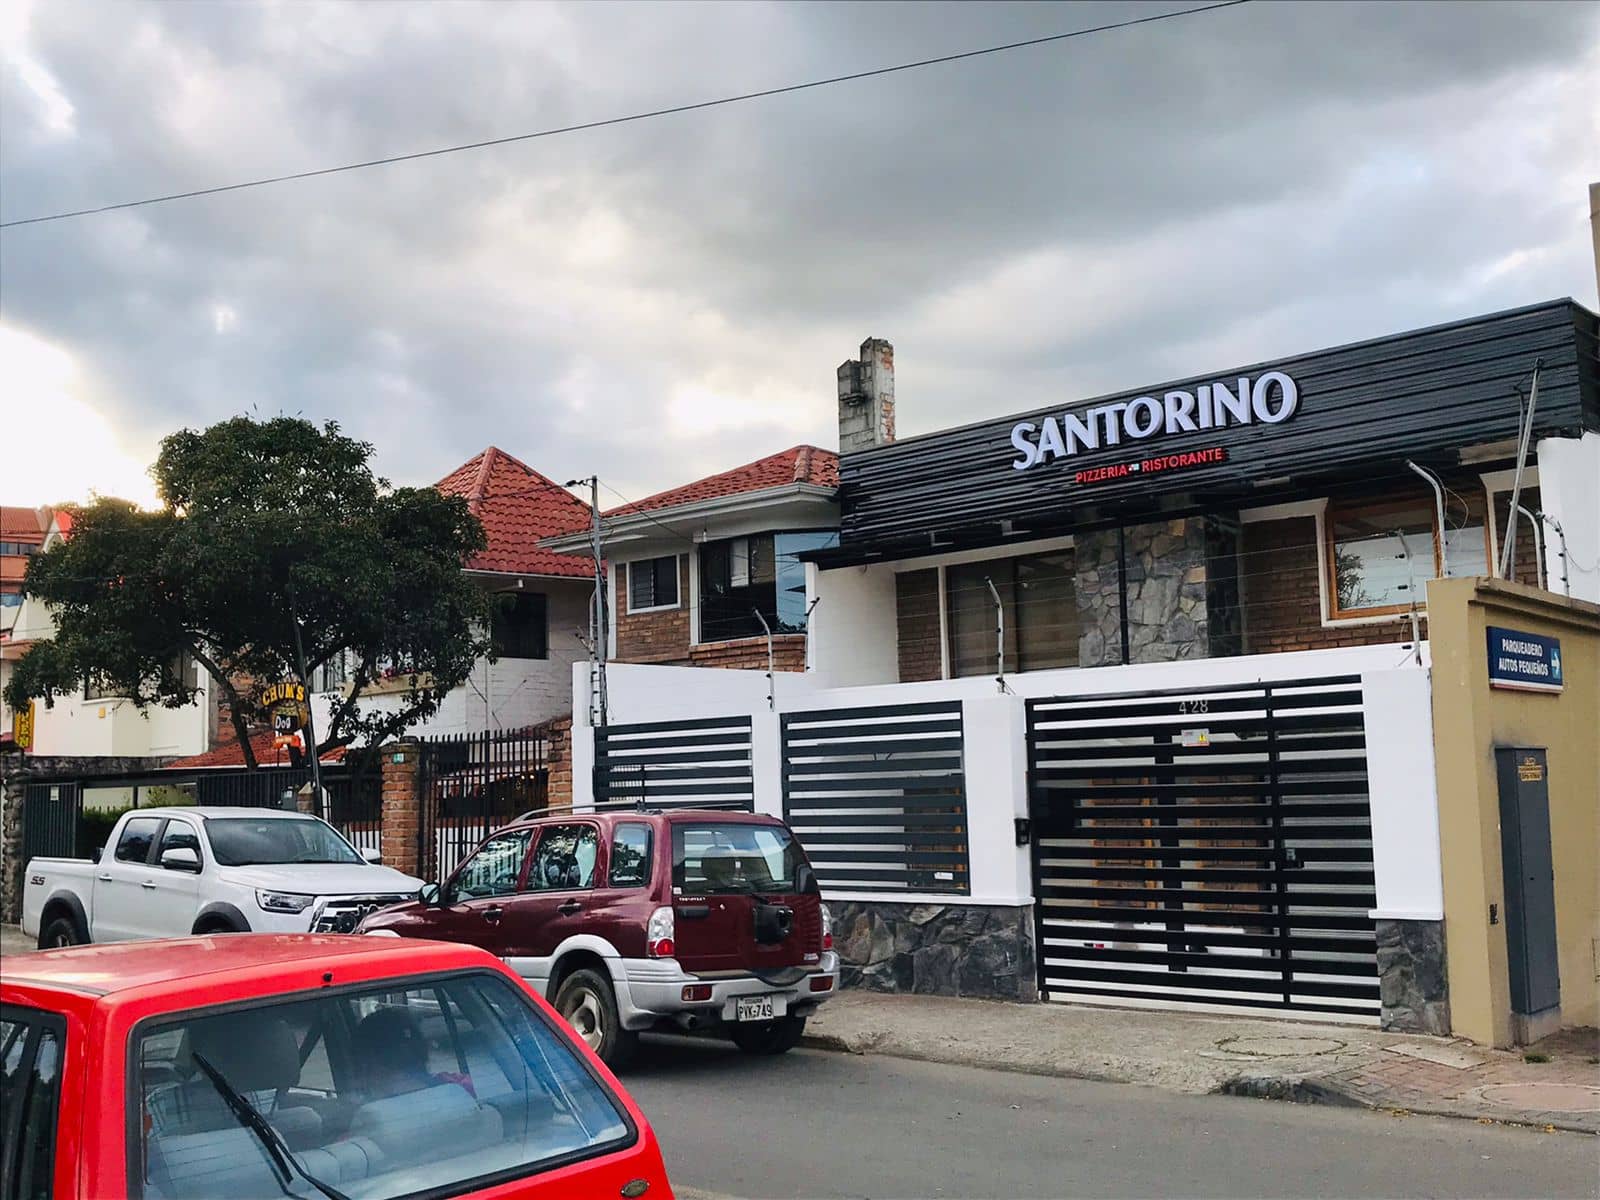 Santorino Restaurant & Pizza New Location 4-28 Imbabura Street and Remigio Crespo Av